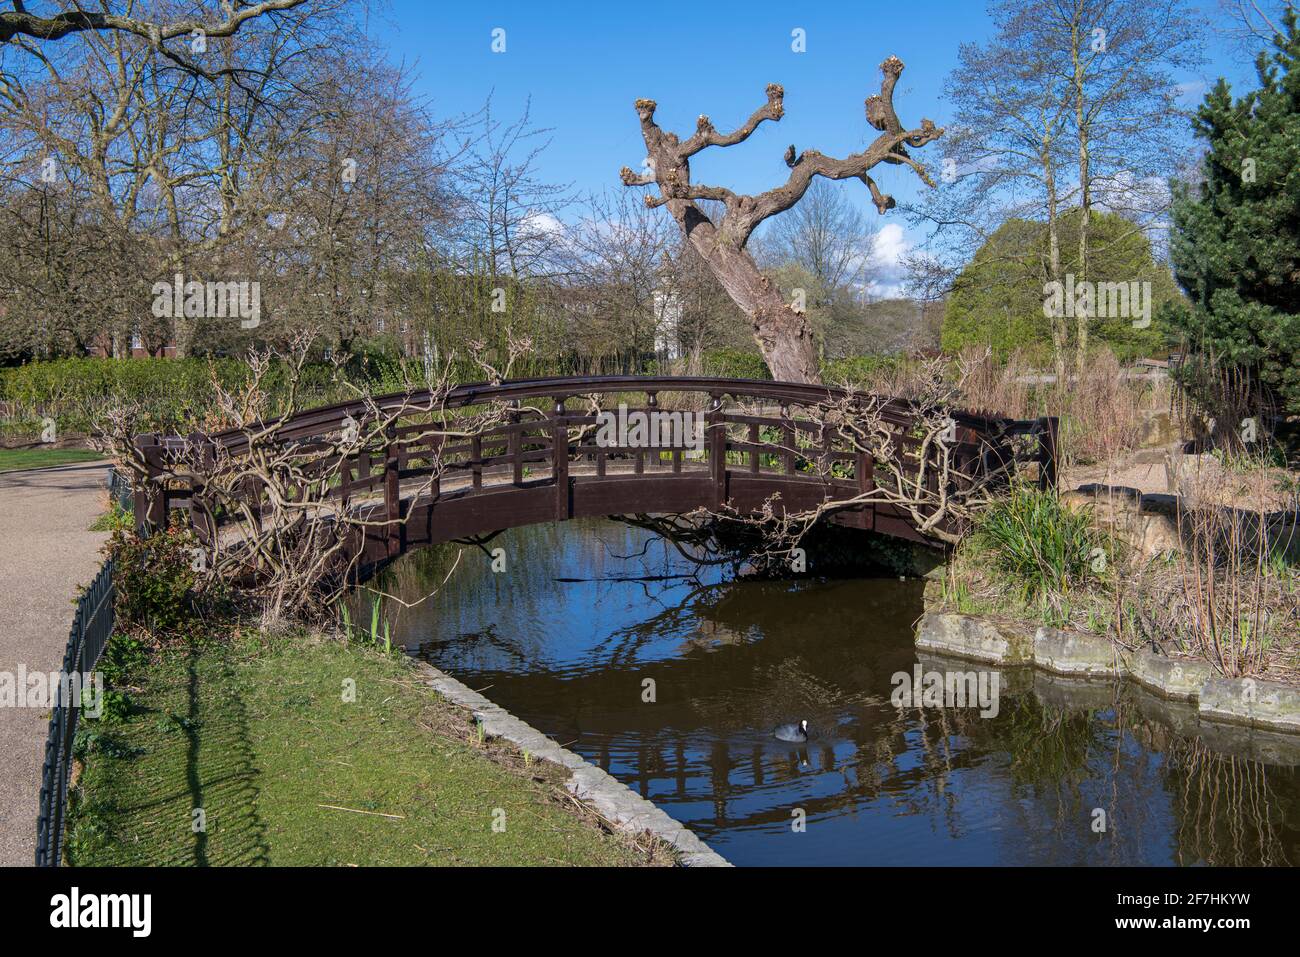 Wooden bridge Japanese Island Queen Mary's Gardens Regents Park London Stock Photo